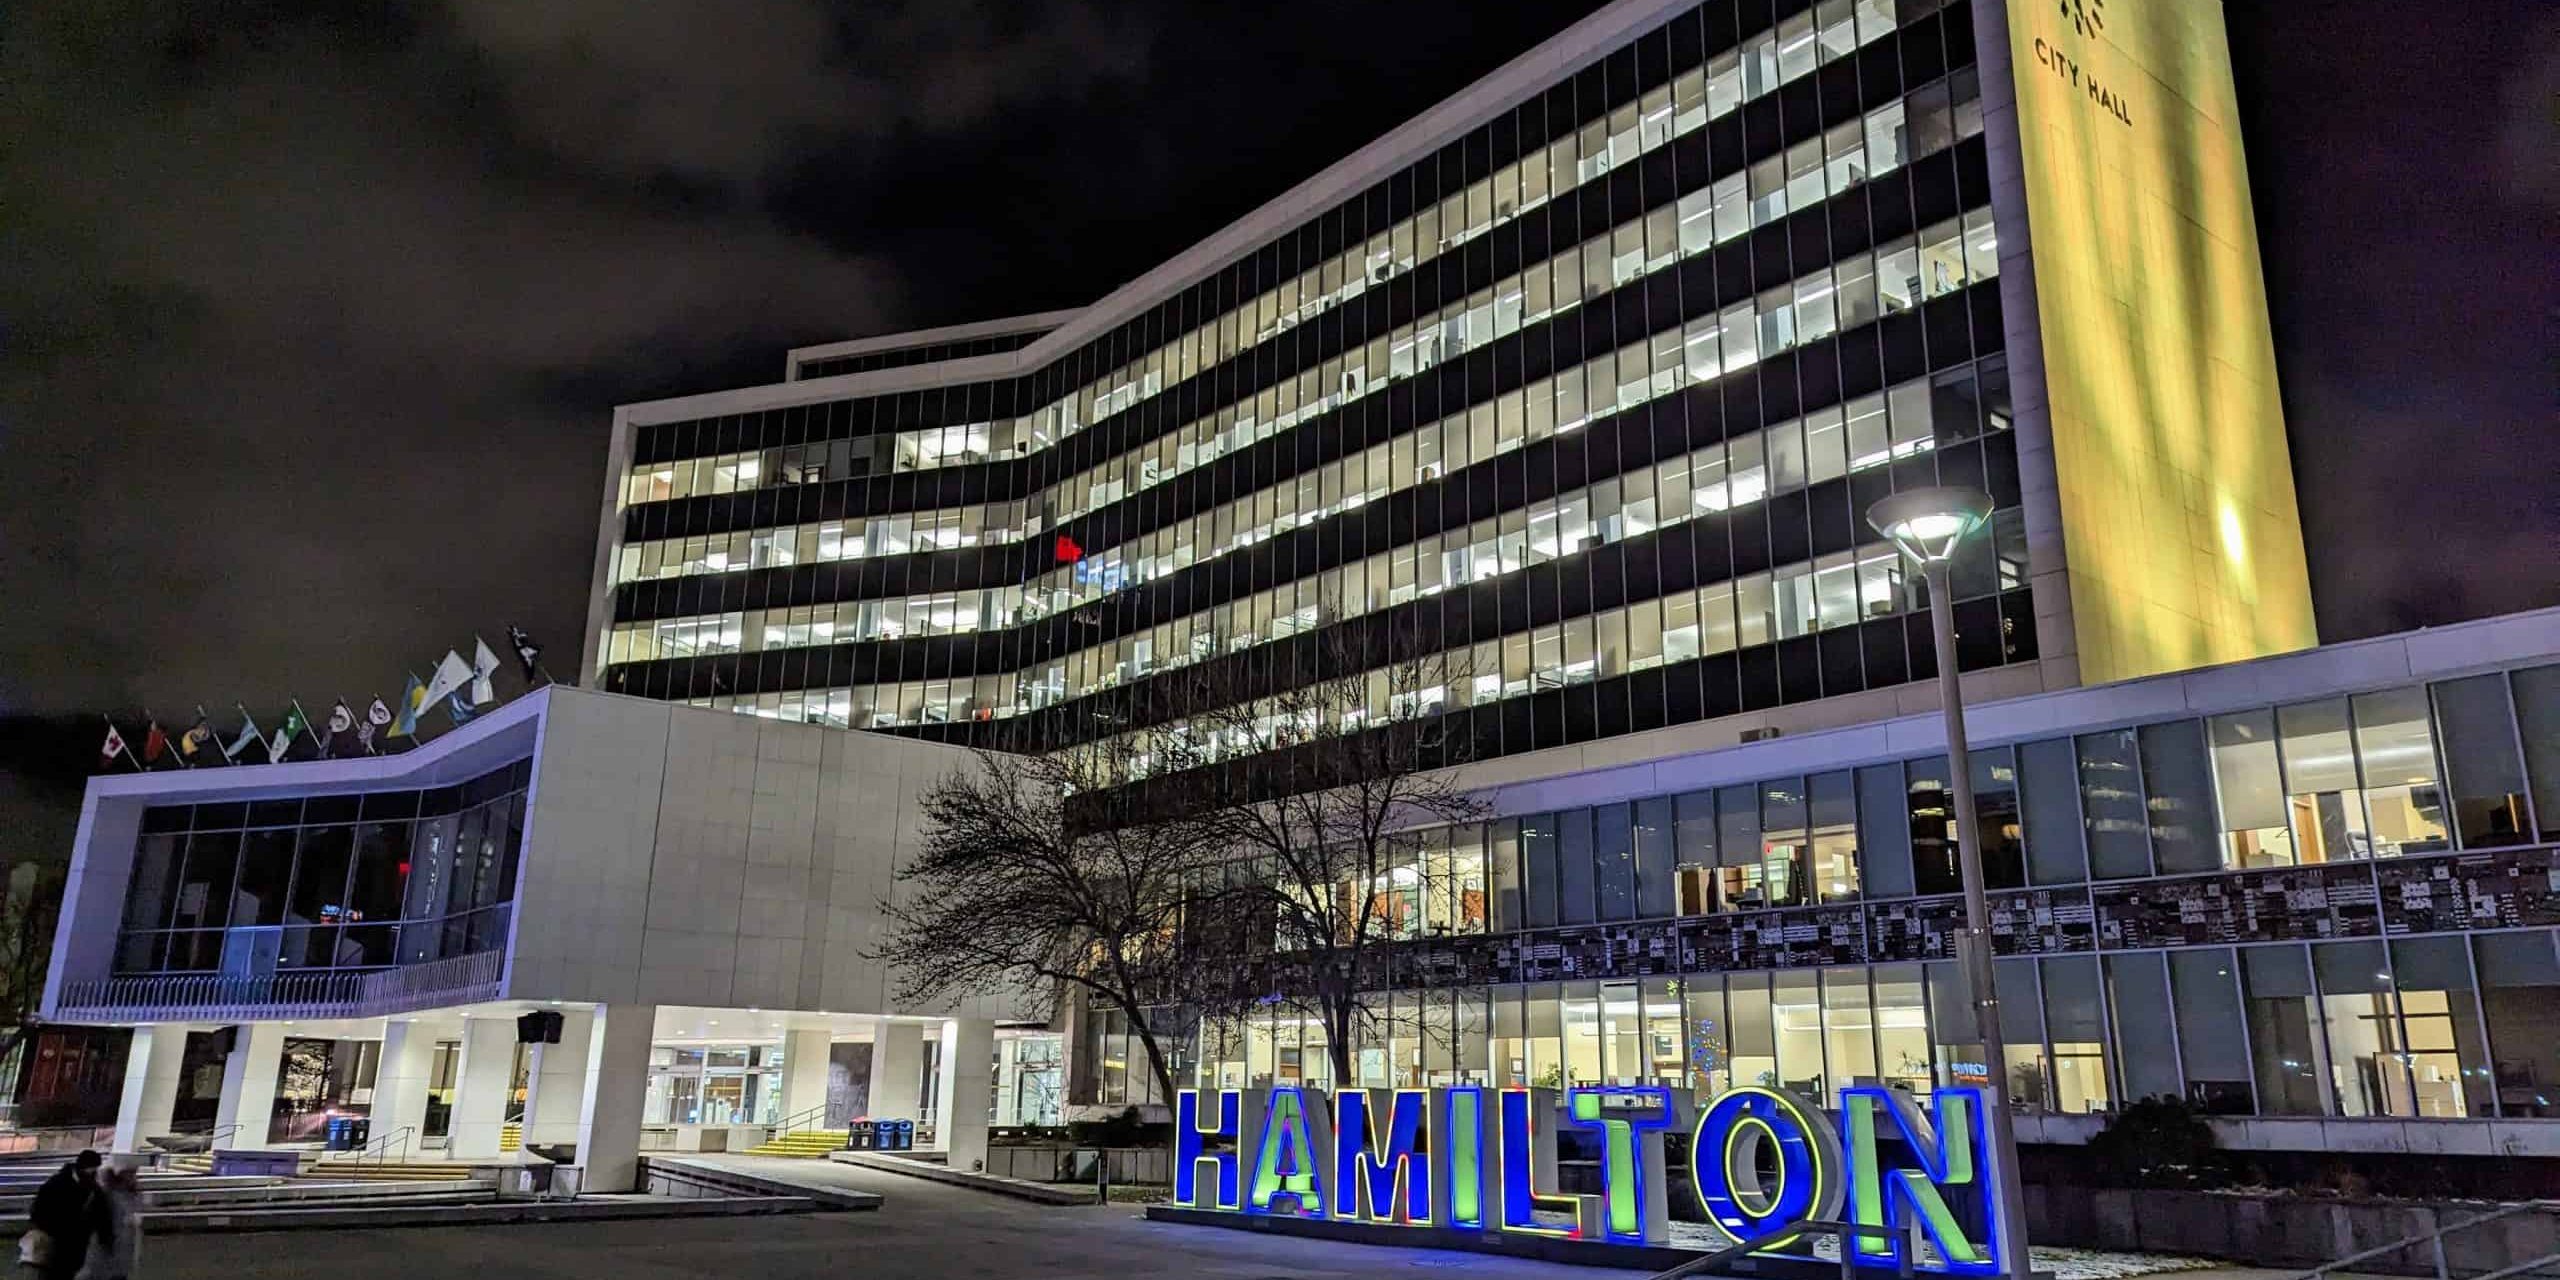 city of hamilton city hall fraud waste hotline report auditor